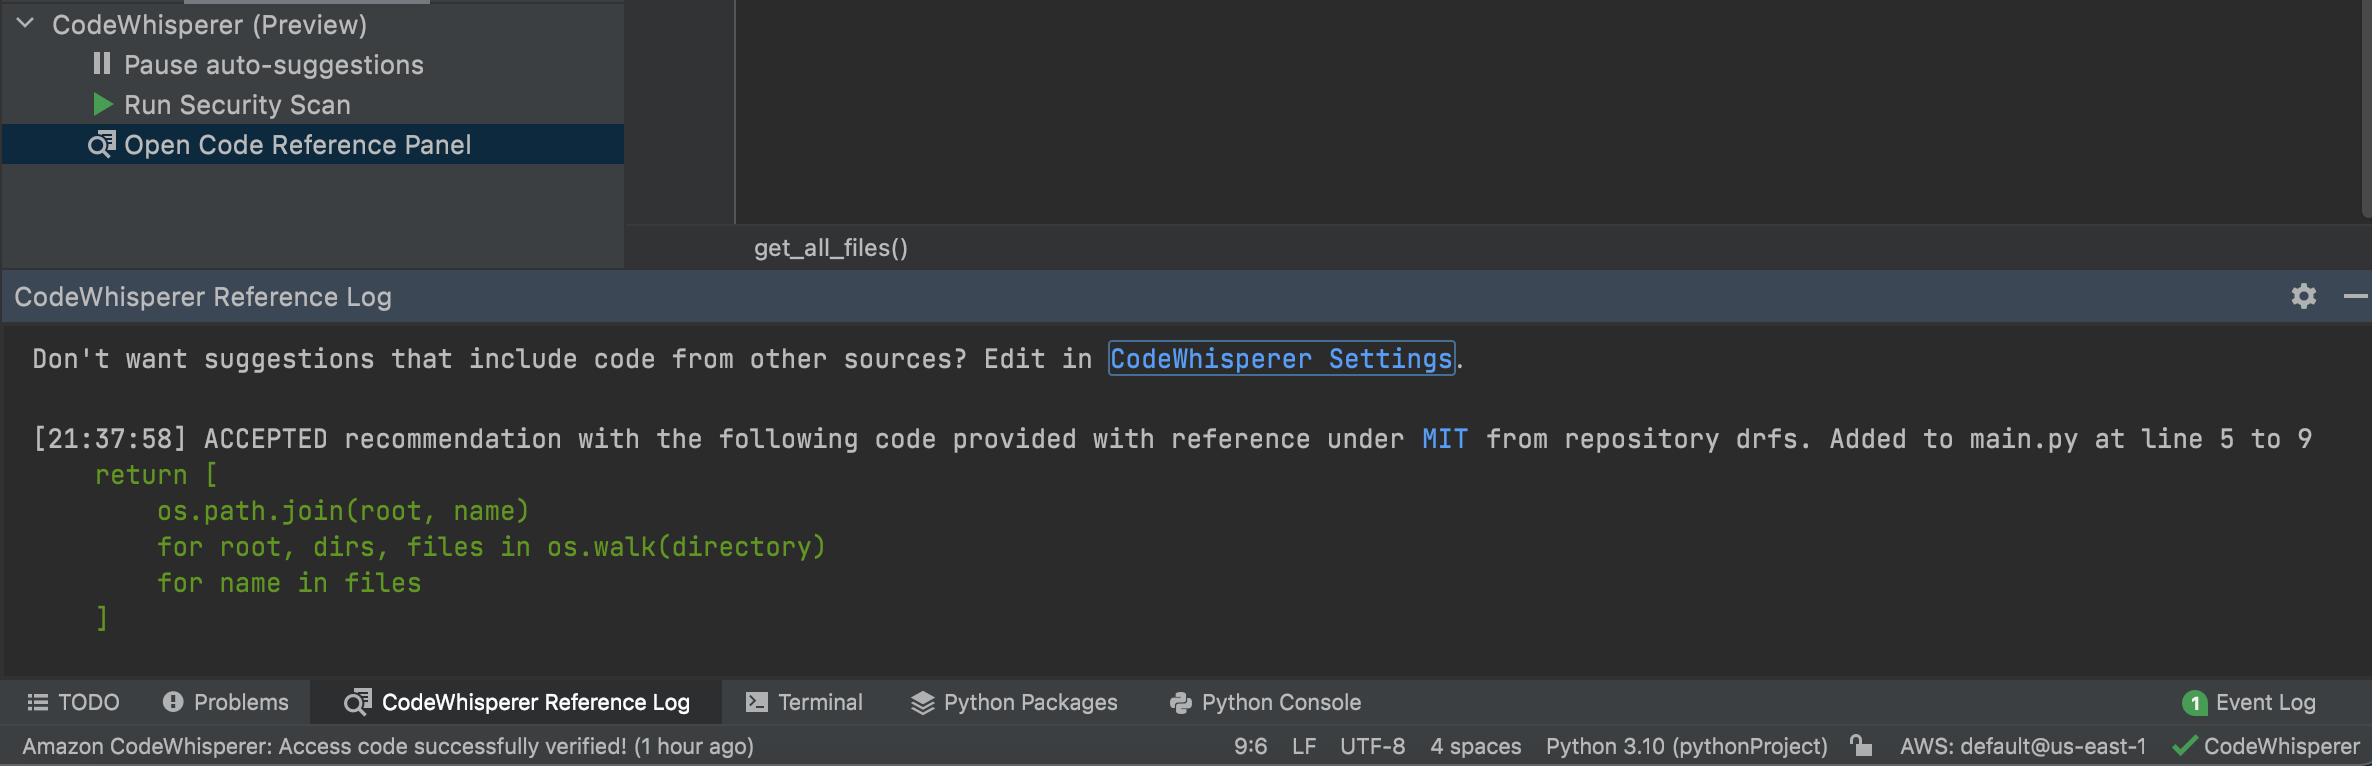 Amazon launches CodeWhisperer, a GitHub Copilot-like AI pair programming tool